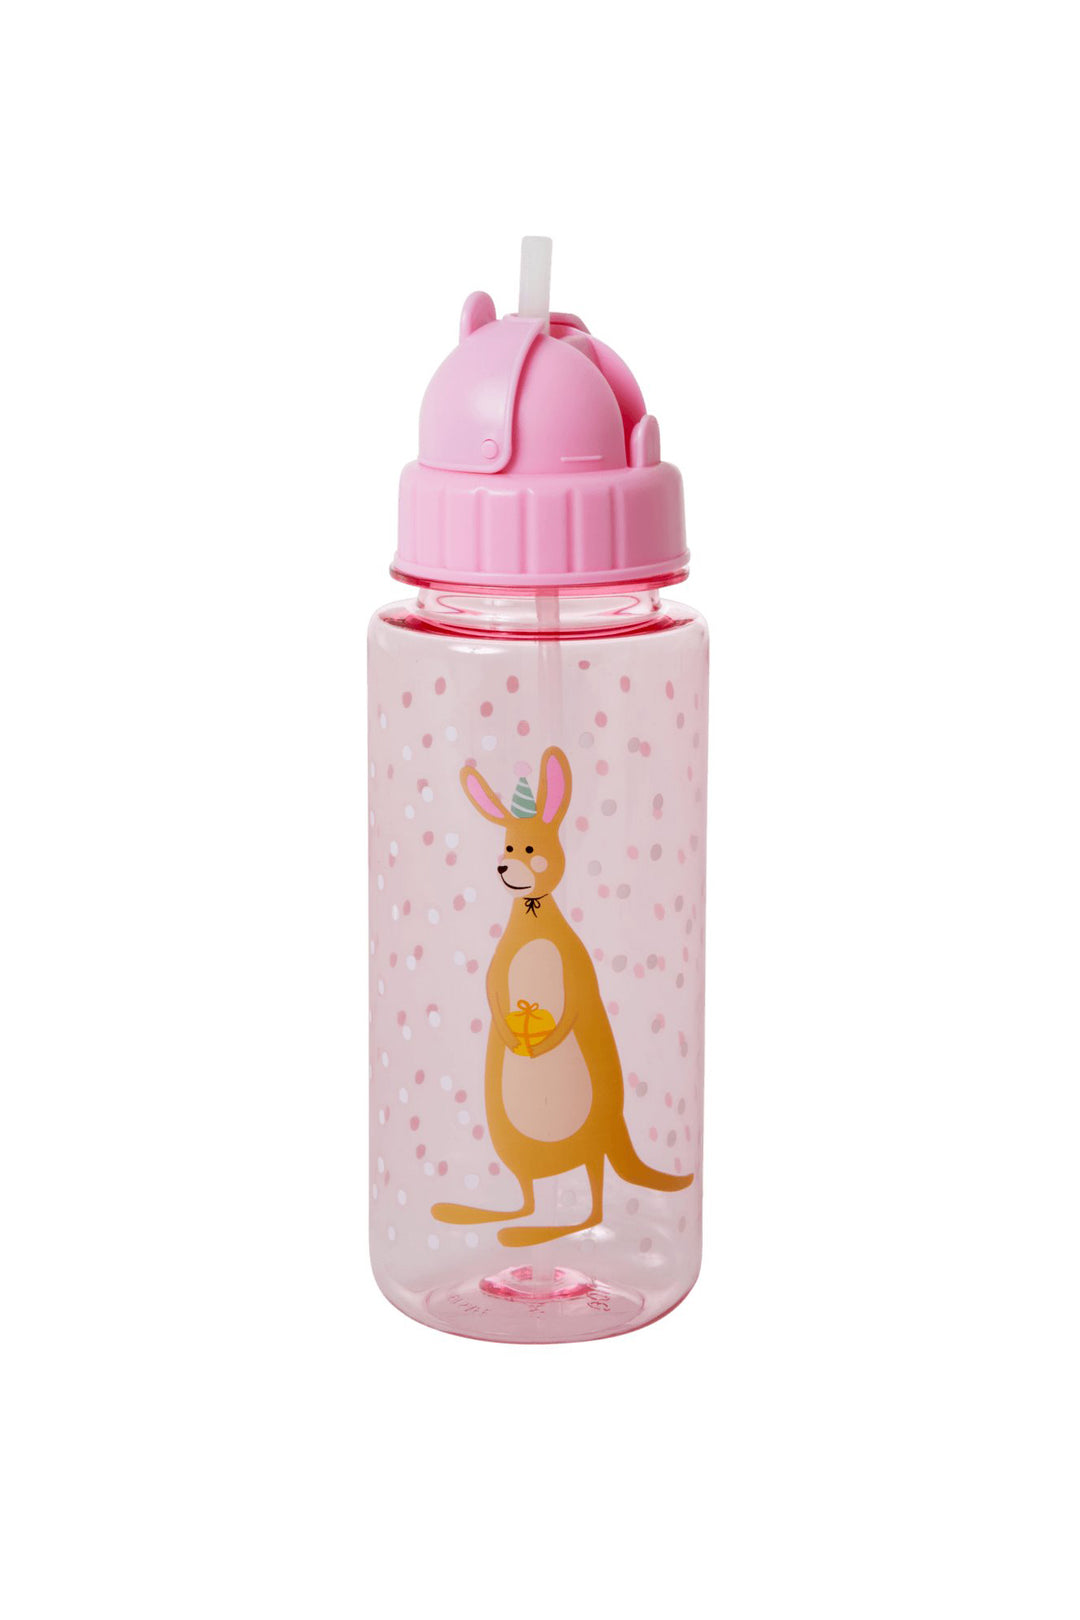 Party Animal Print Plastic Kids Water Bottle Pink